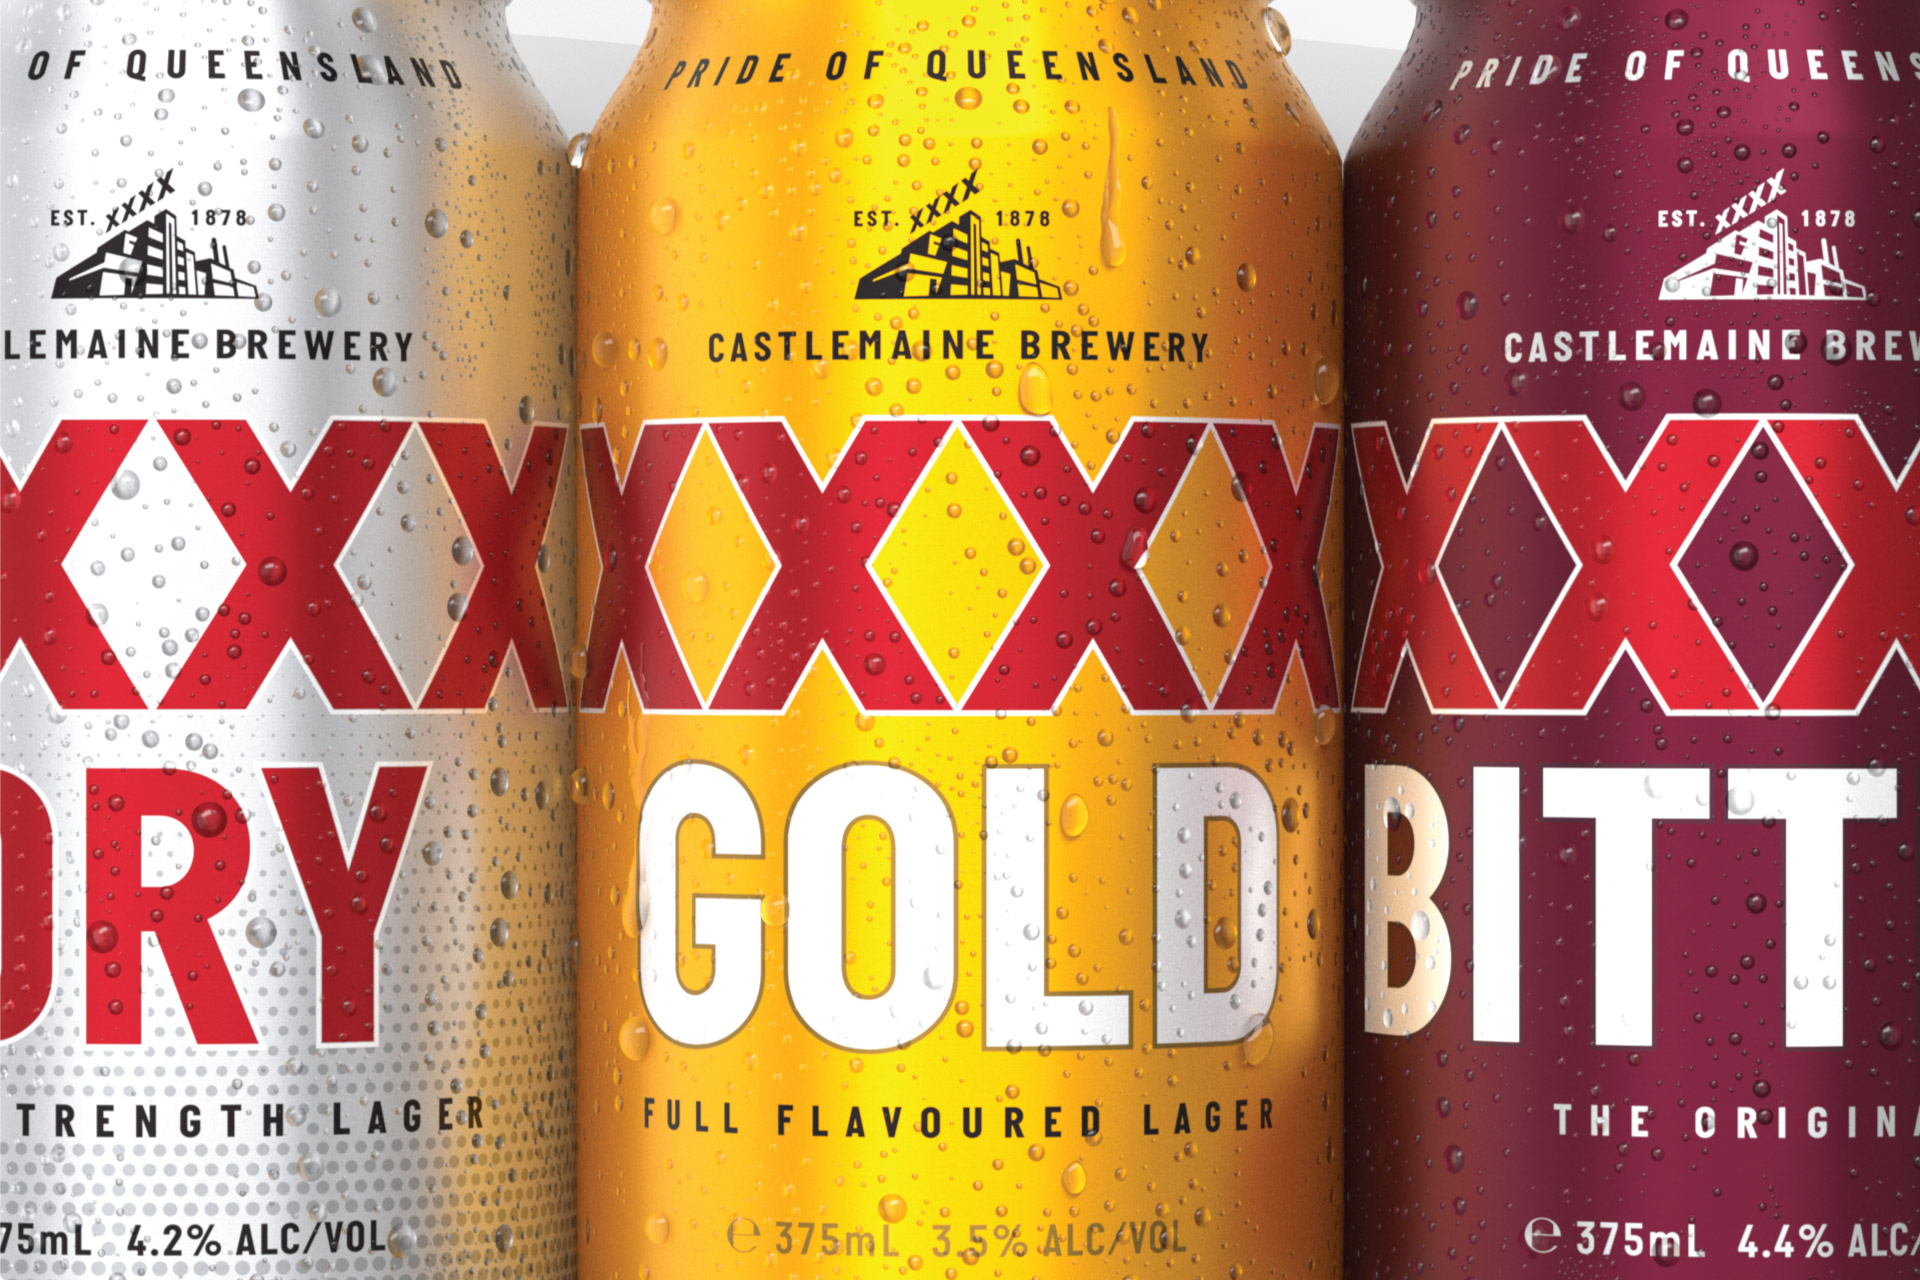 XXXX Australian Beer Rebranding by Landor & Fitch